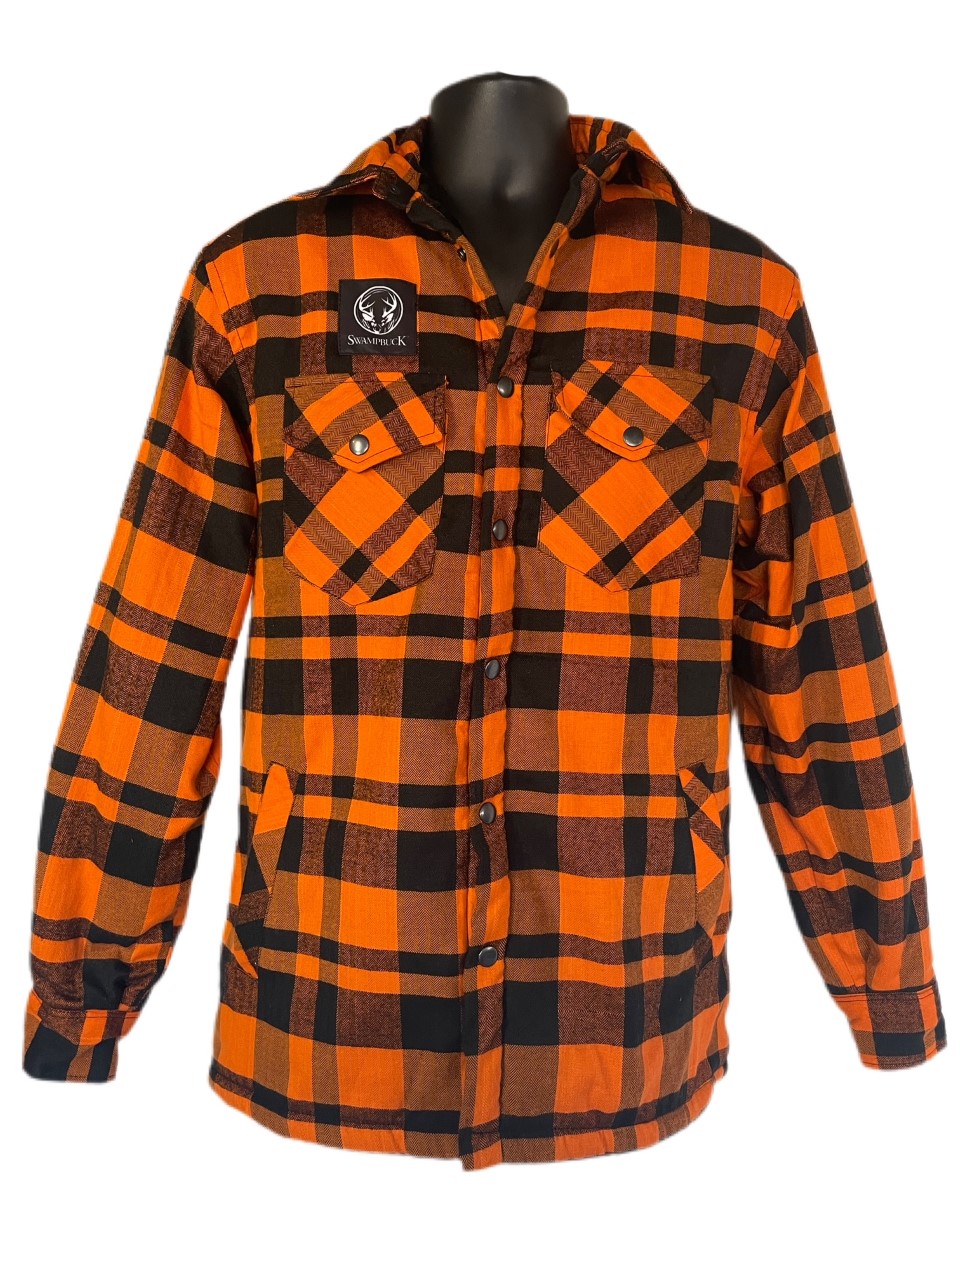 NEW – Blaze Orange Flannel shirt/jacket with Sherpa Lining